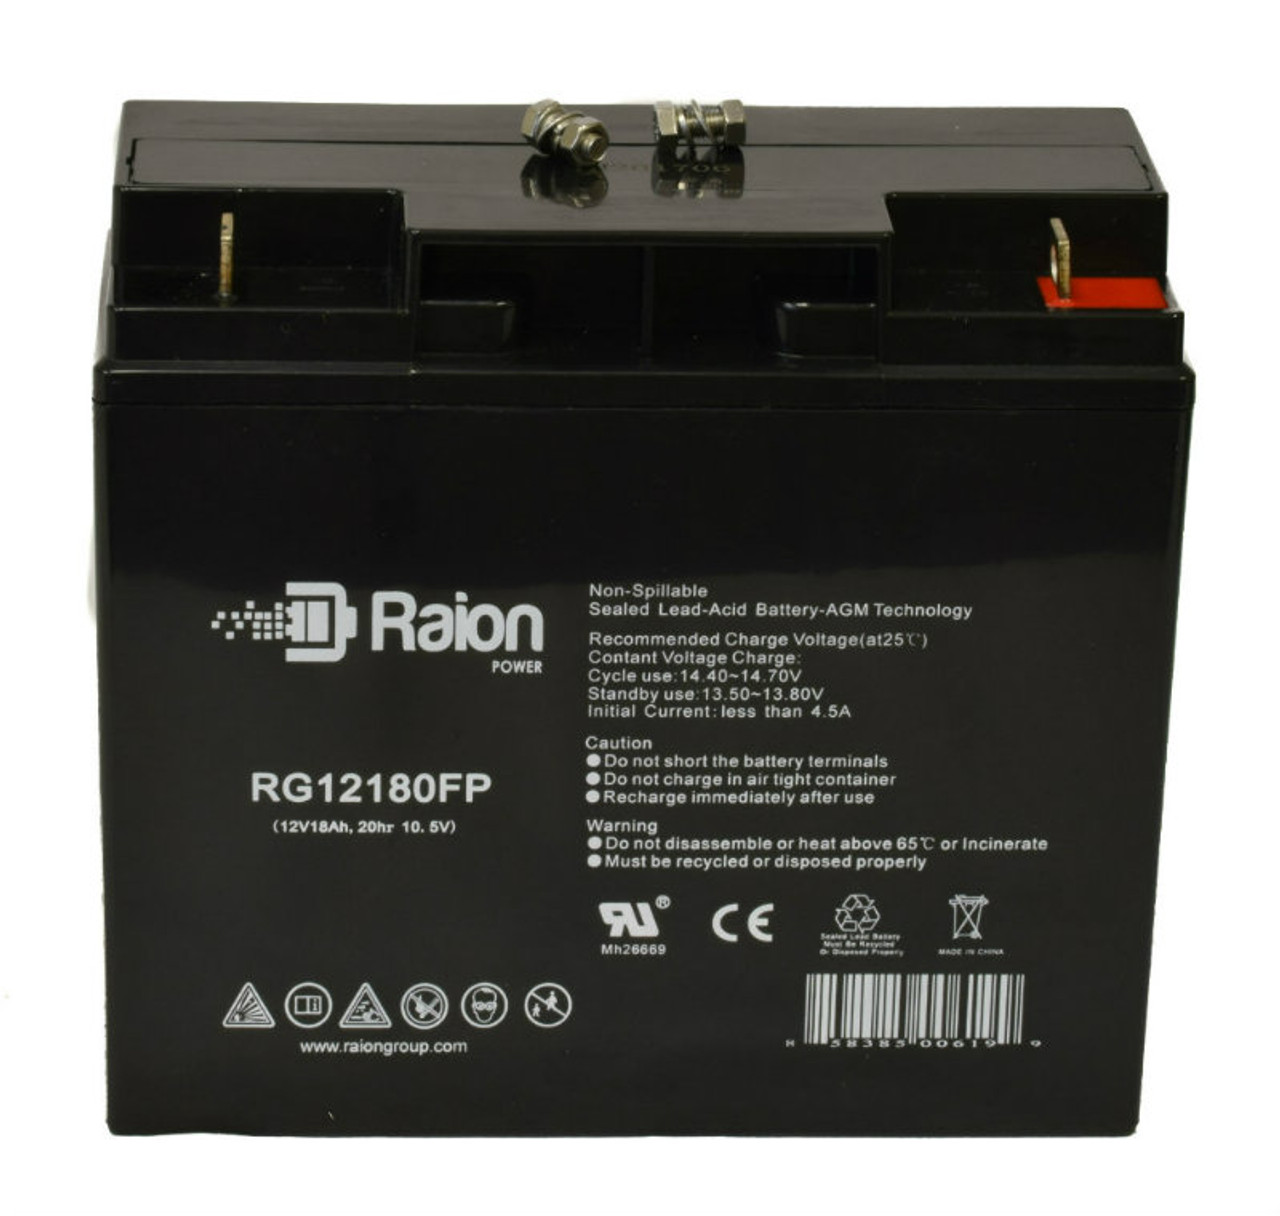 Raion Power RG12180FP 12V 18Ah Lead Acid Battery for Universal Power UB12180 (40648)